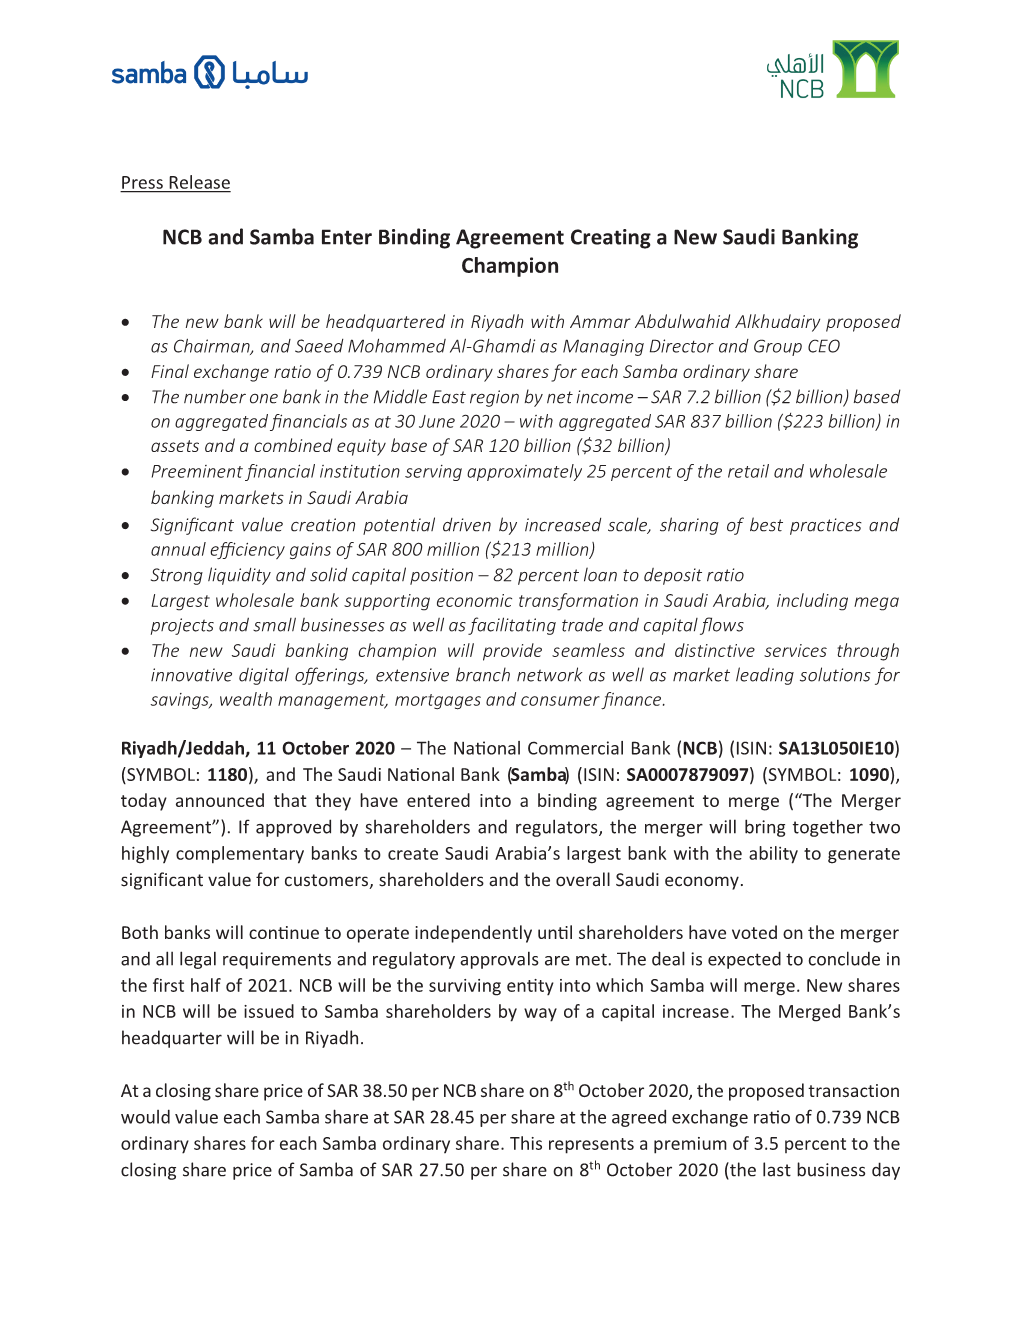 NCB and Samba Enter Binding Agreement Creating a New Saudi Banking Champion